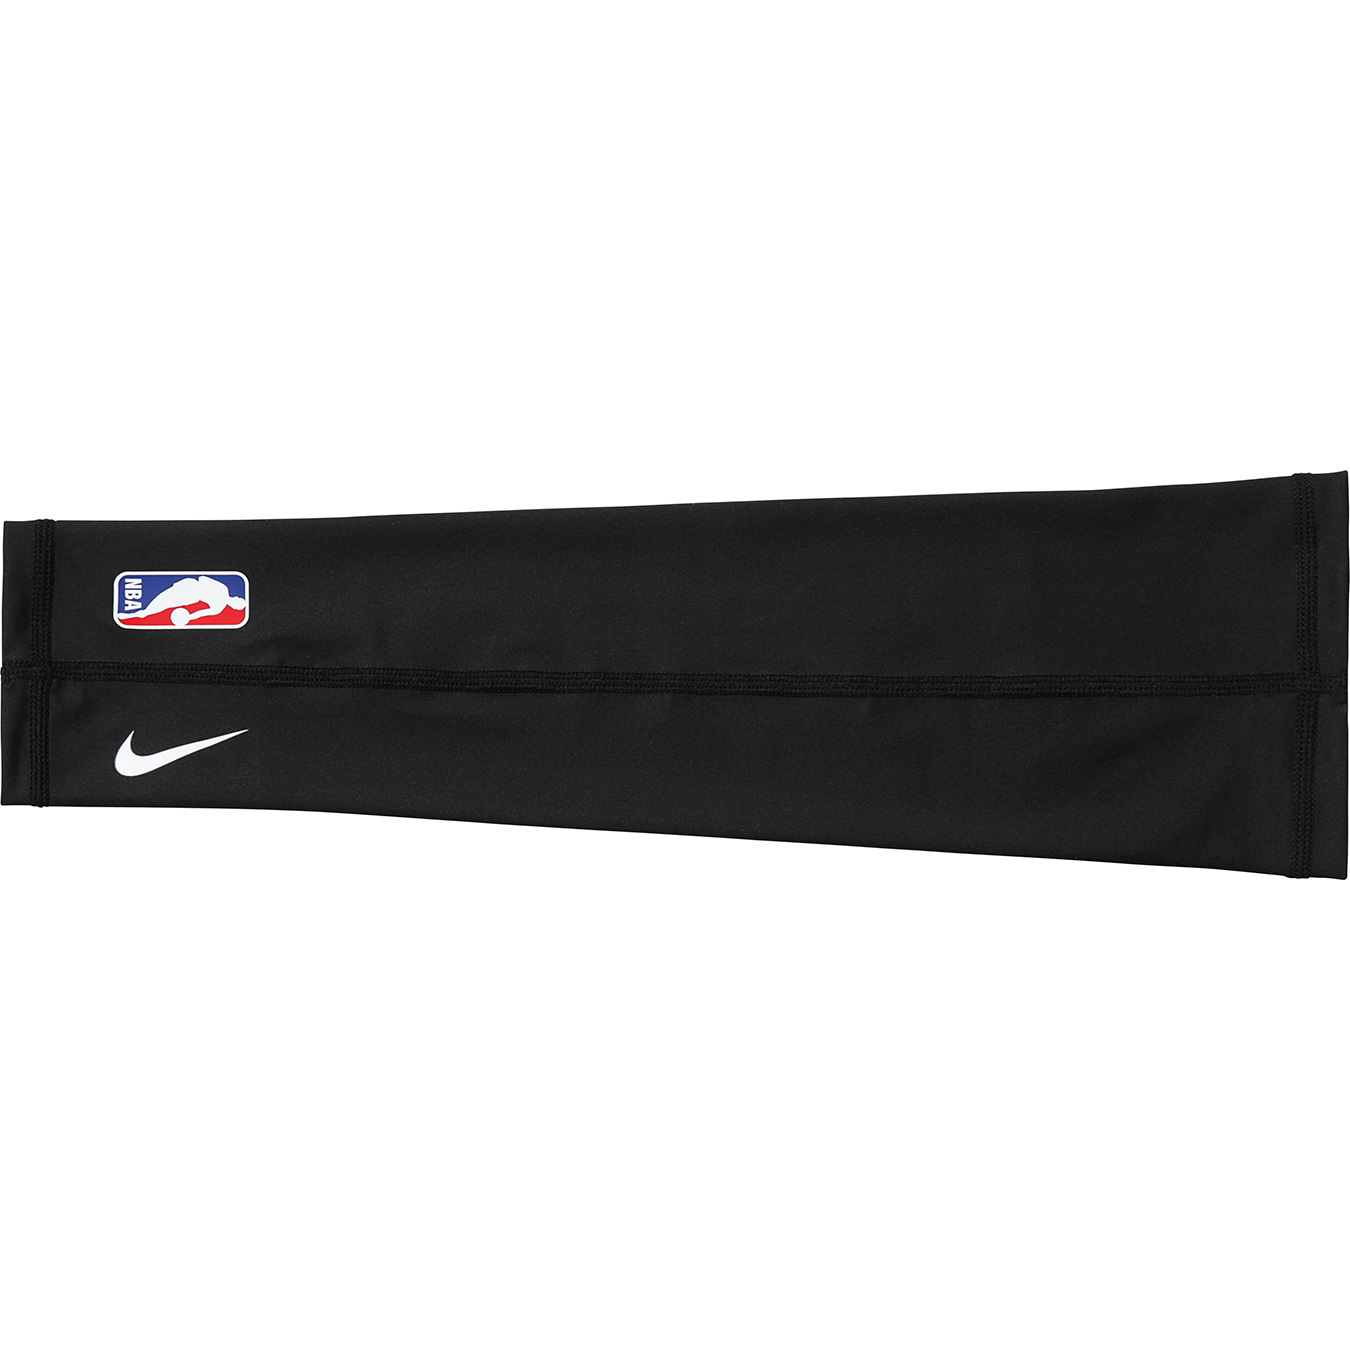 Supreme Nike/NBA Shooting Sleeve (2 Pack) Black